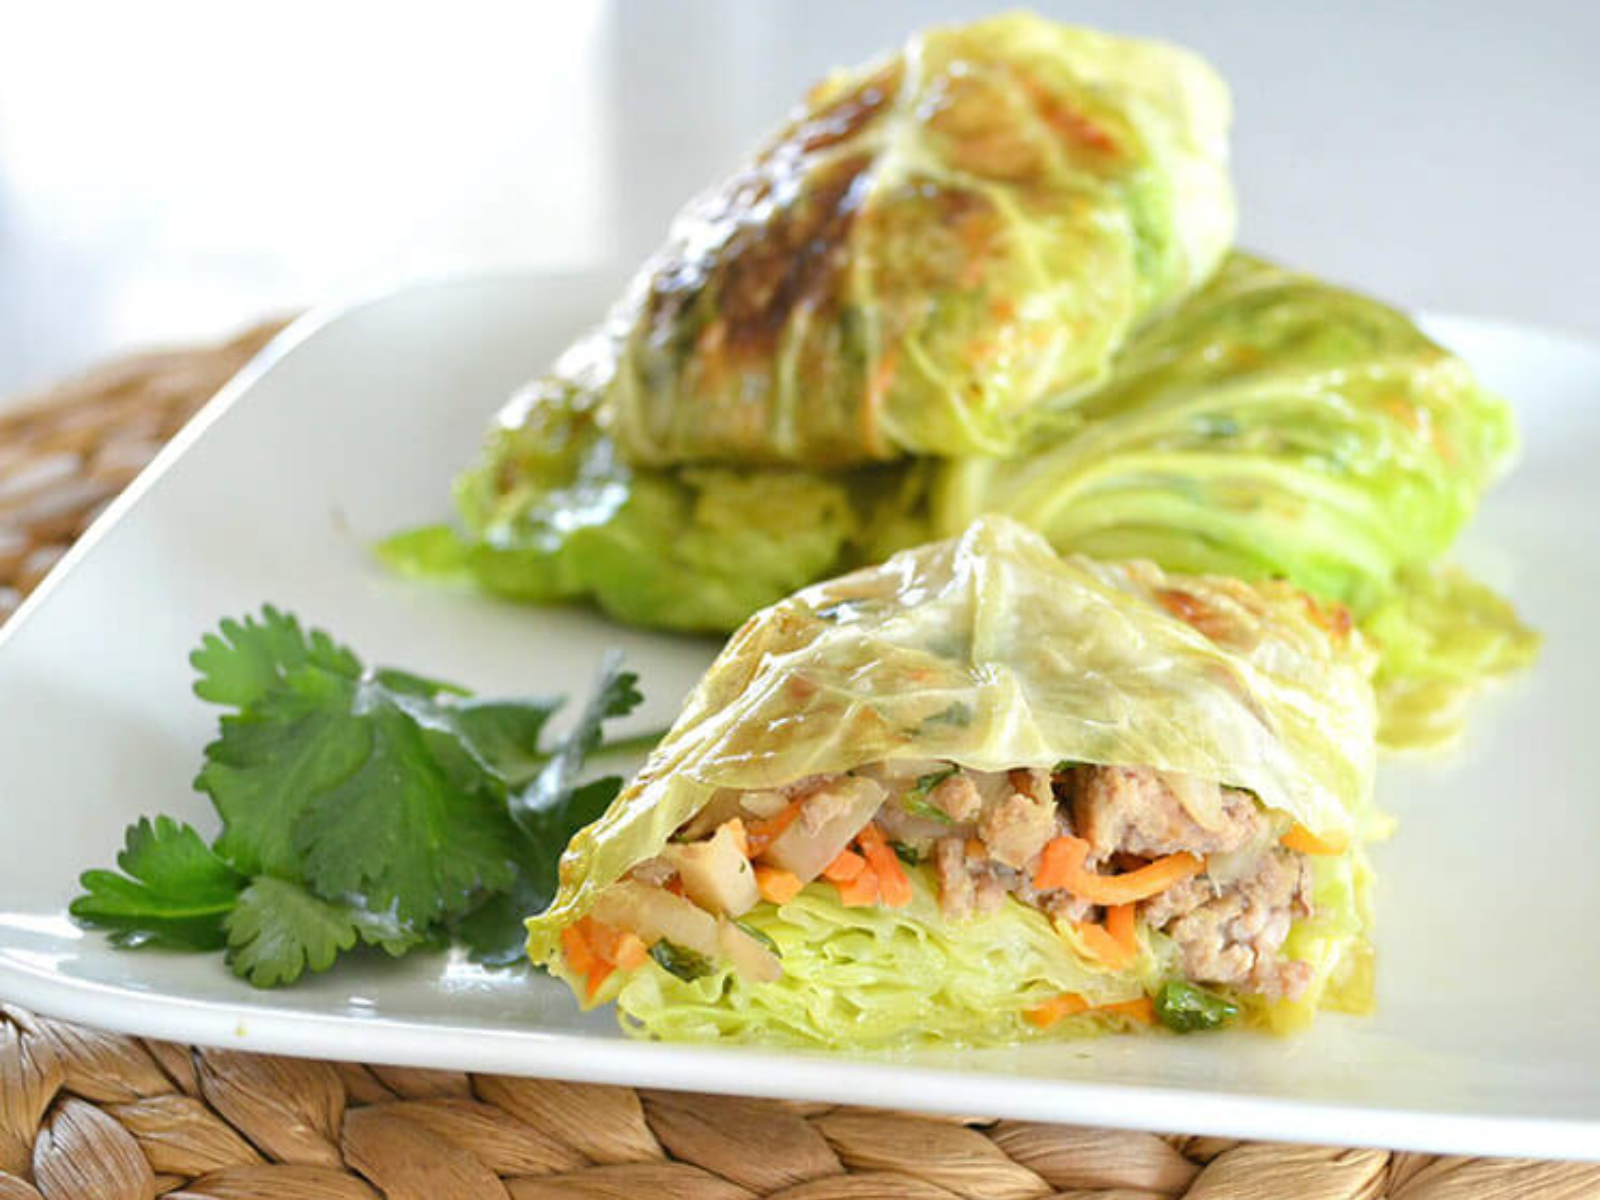 Dumpling-Inspired Cabbage Wraps